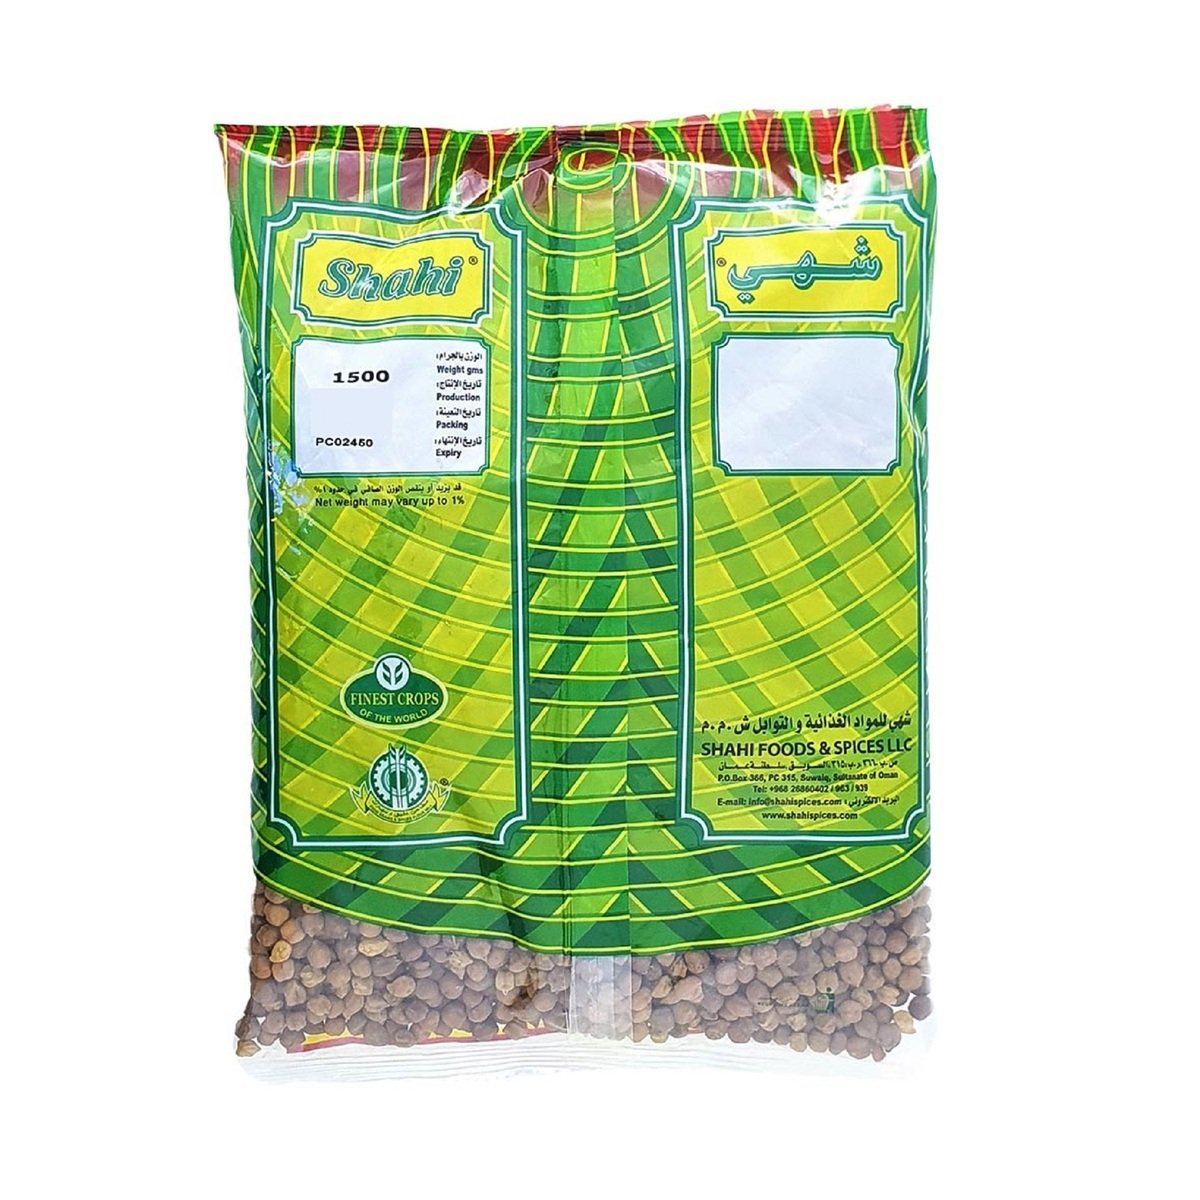 Shahi Black Chick Peas Value Pack 1.5 kg